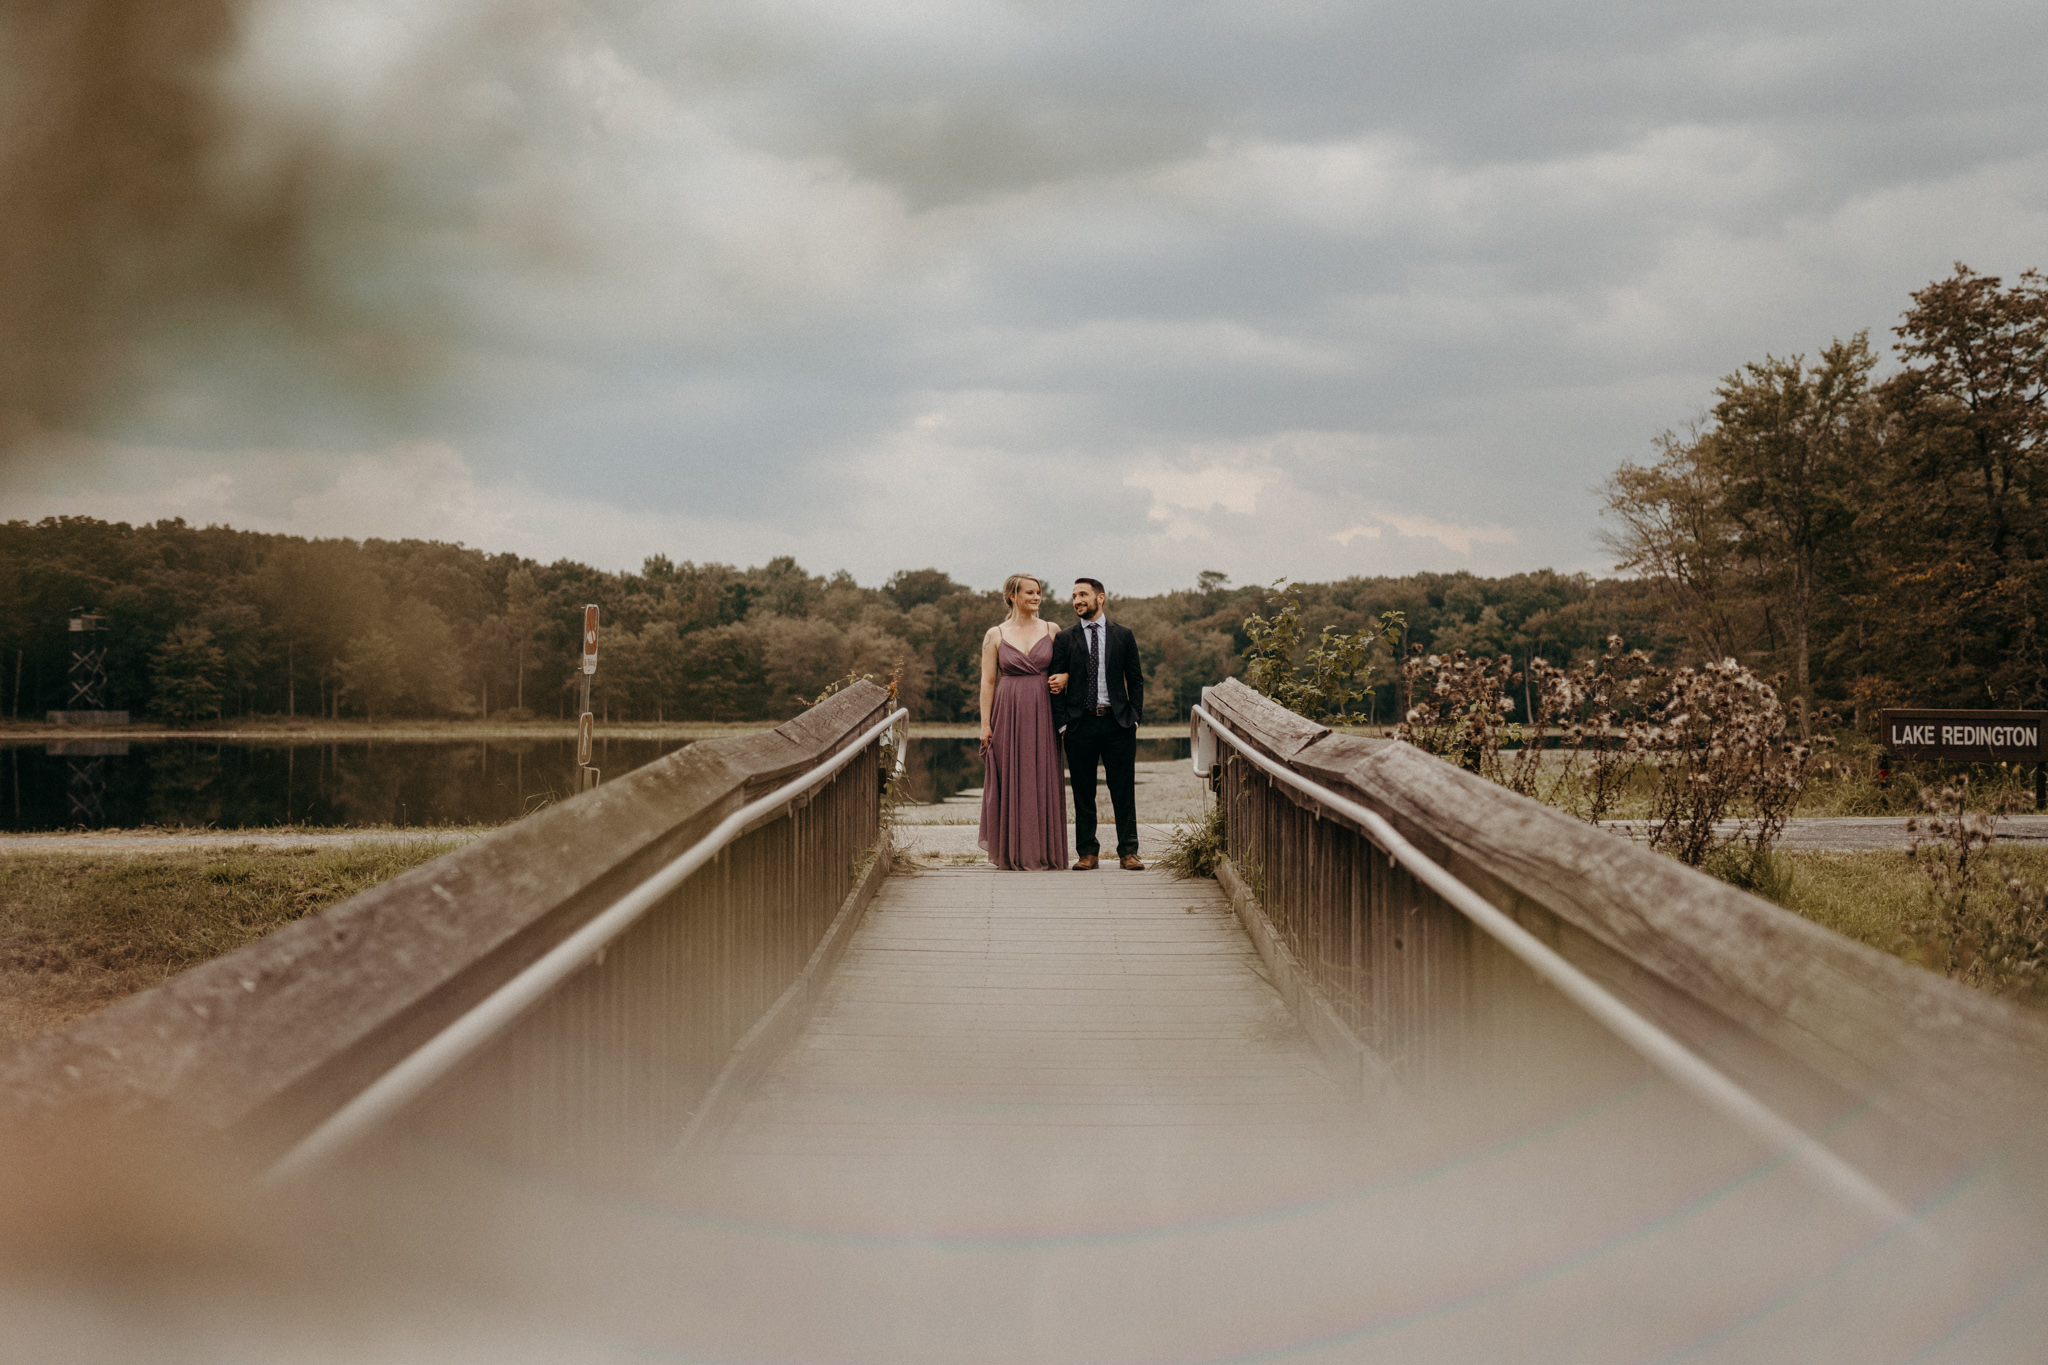 Patuxent park engagement session on lake redington // dc wedding photographer